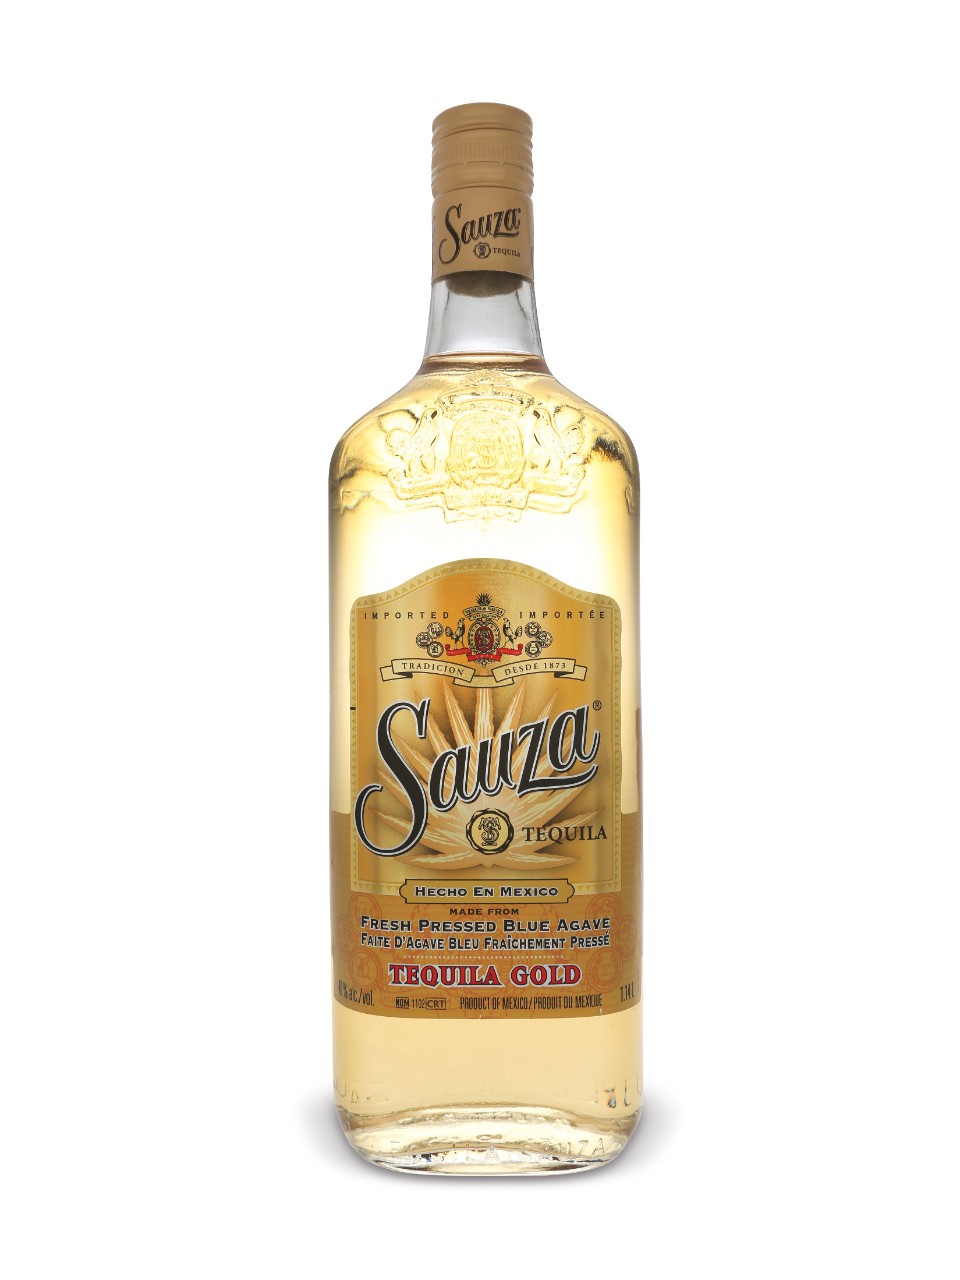 Sauza Gold Tequila